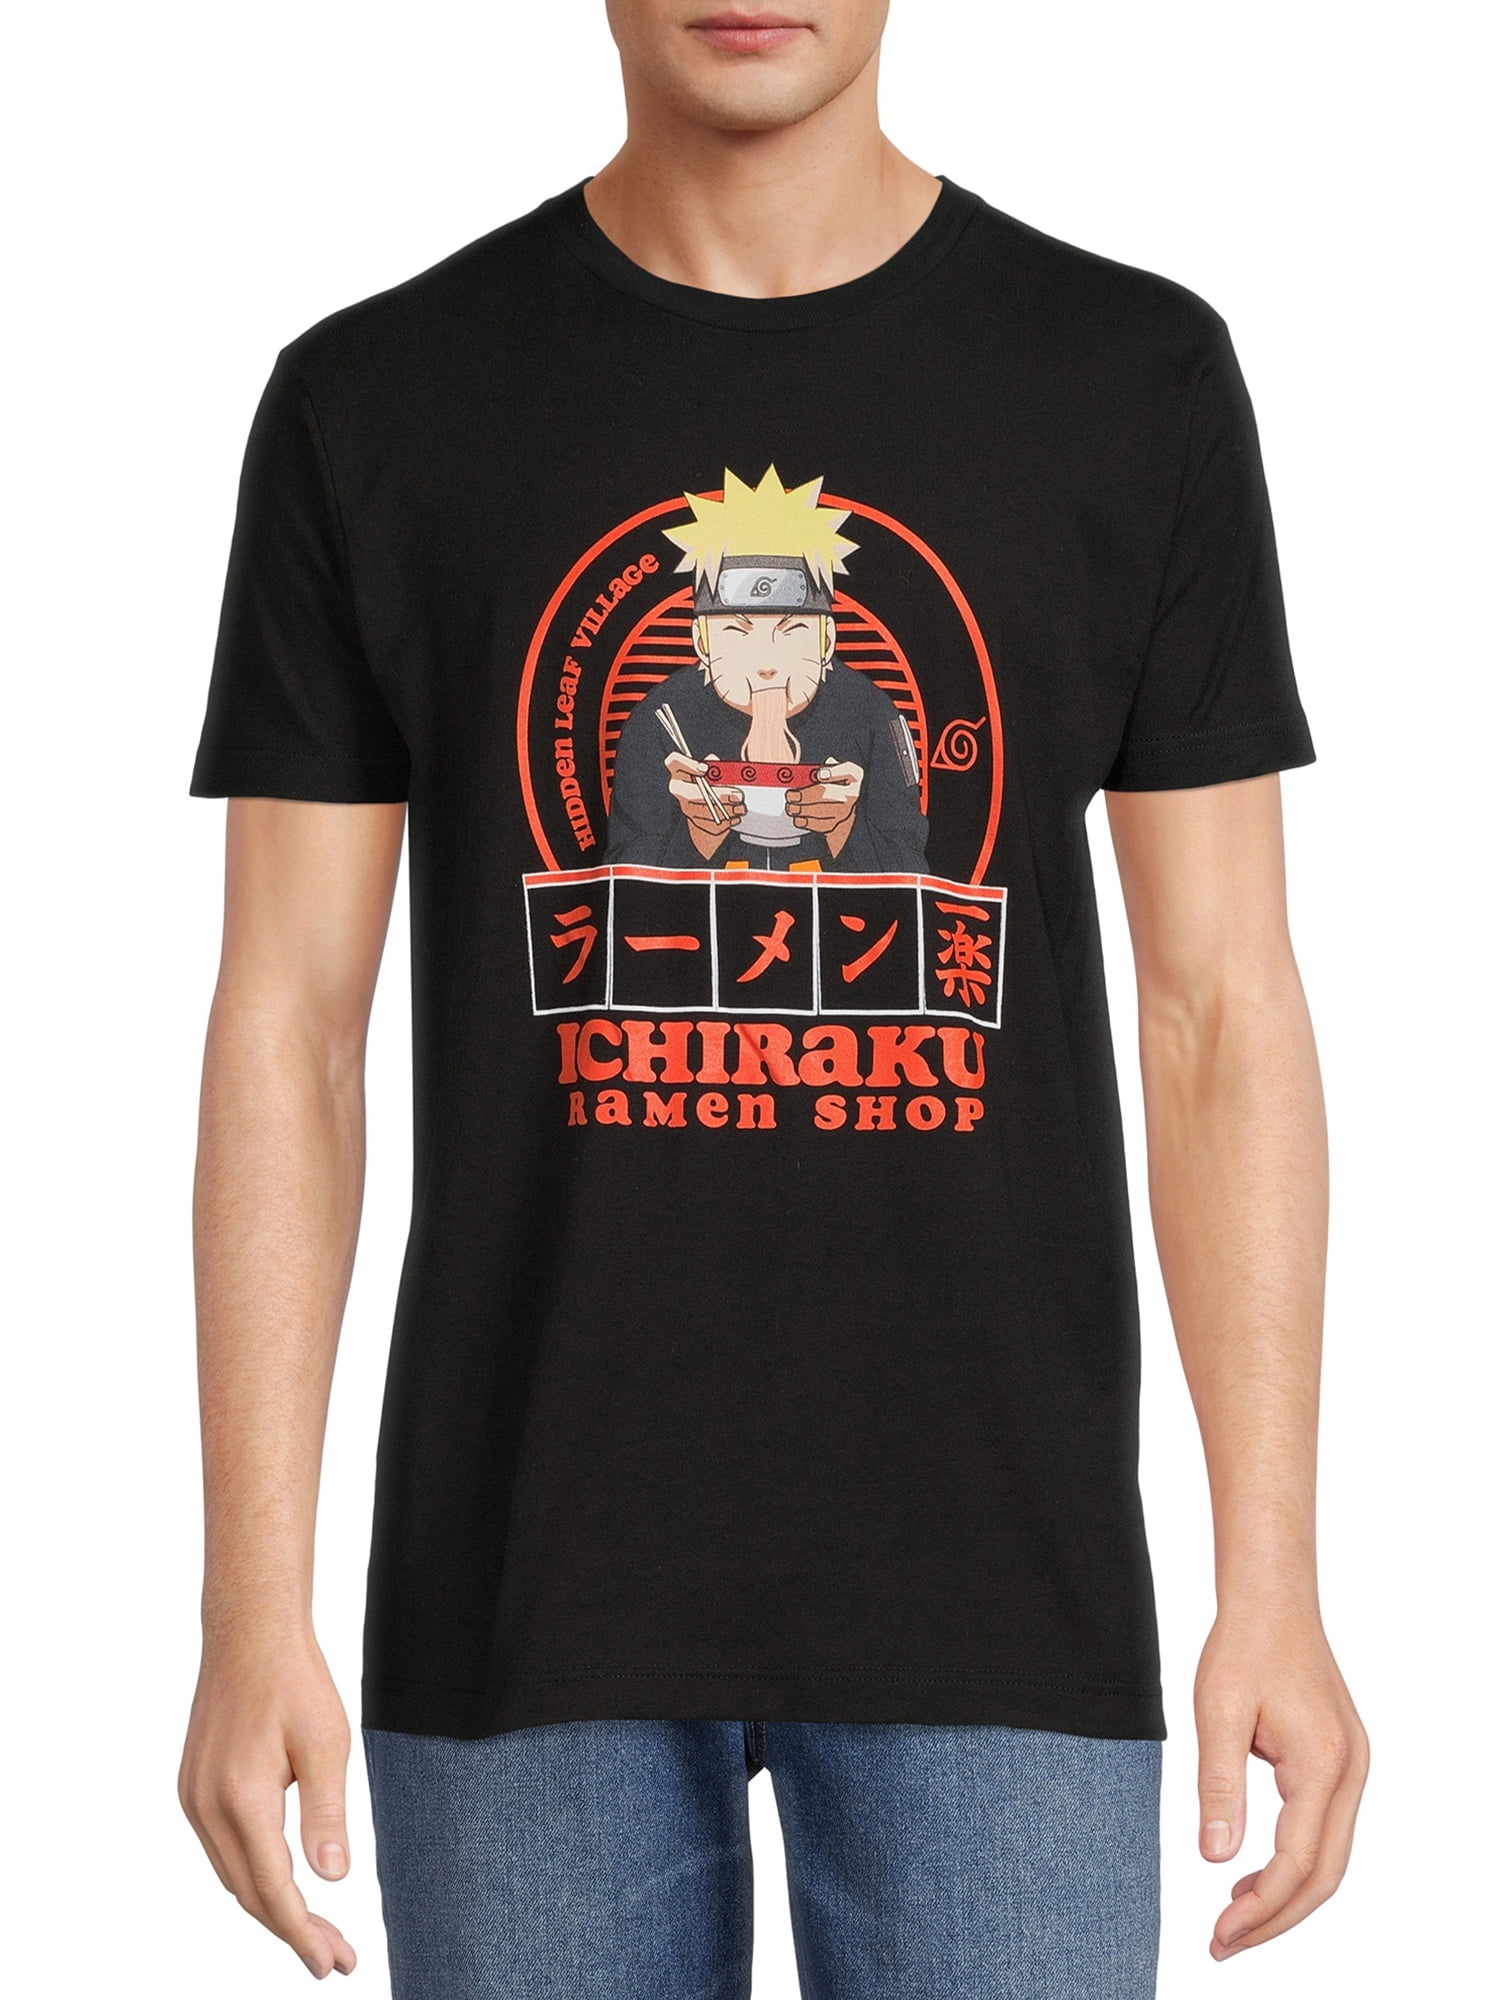 Naruto Shippuden Men's & Big Men's Graphic Tee Shirt, Sizes S-3XL